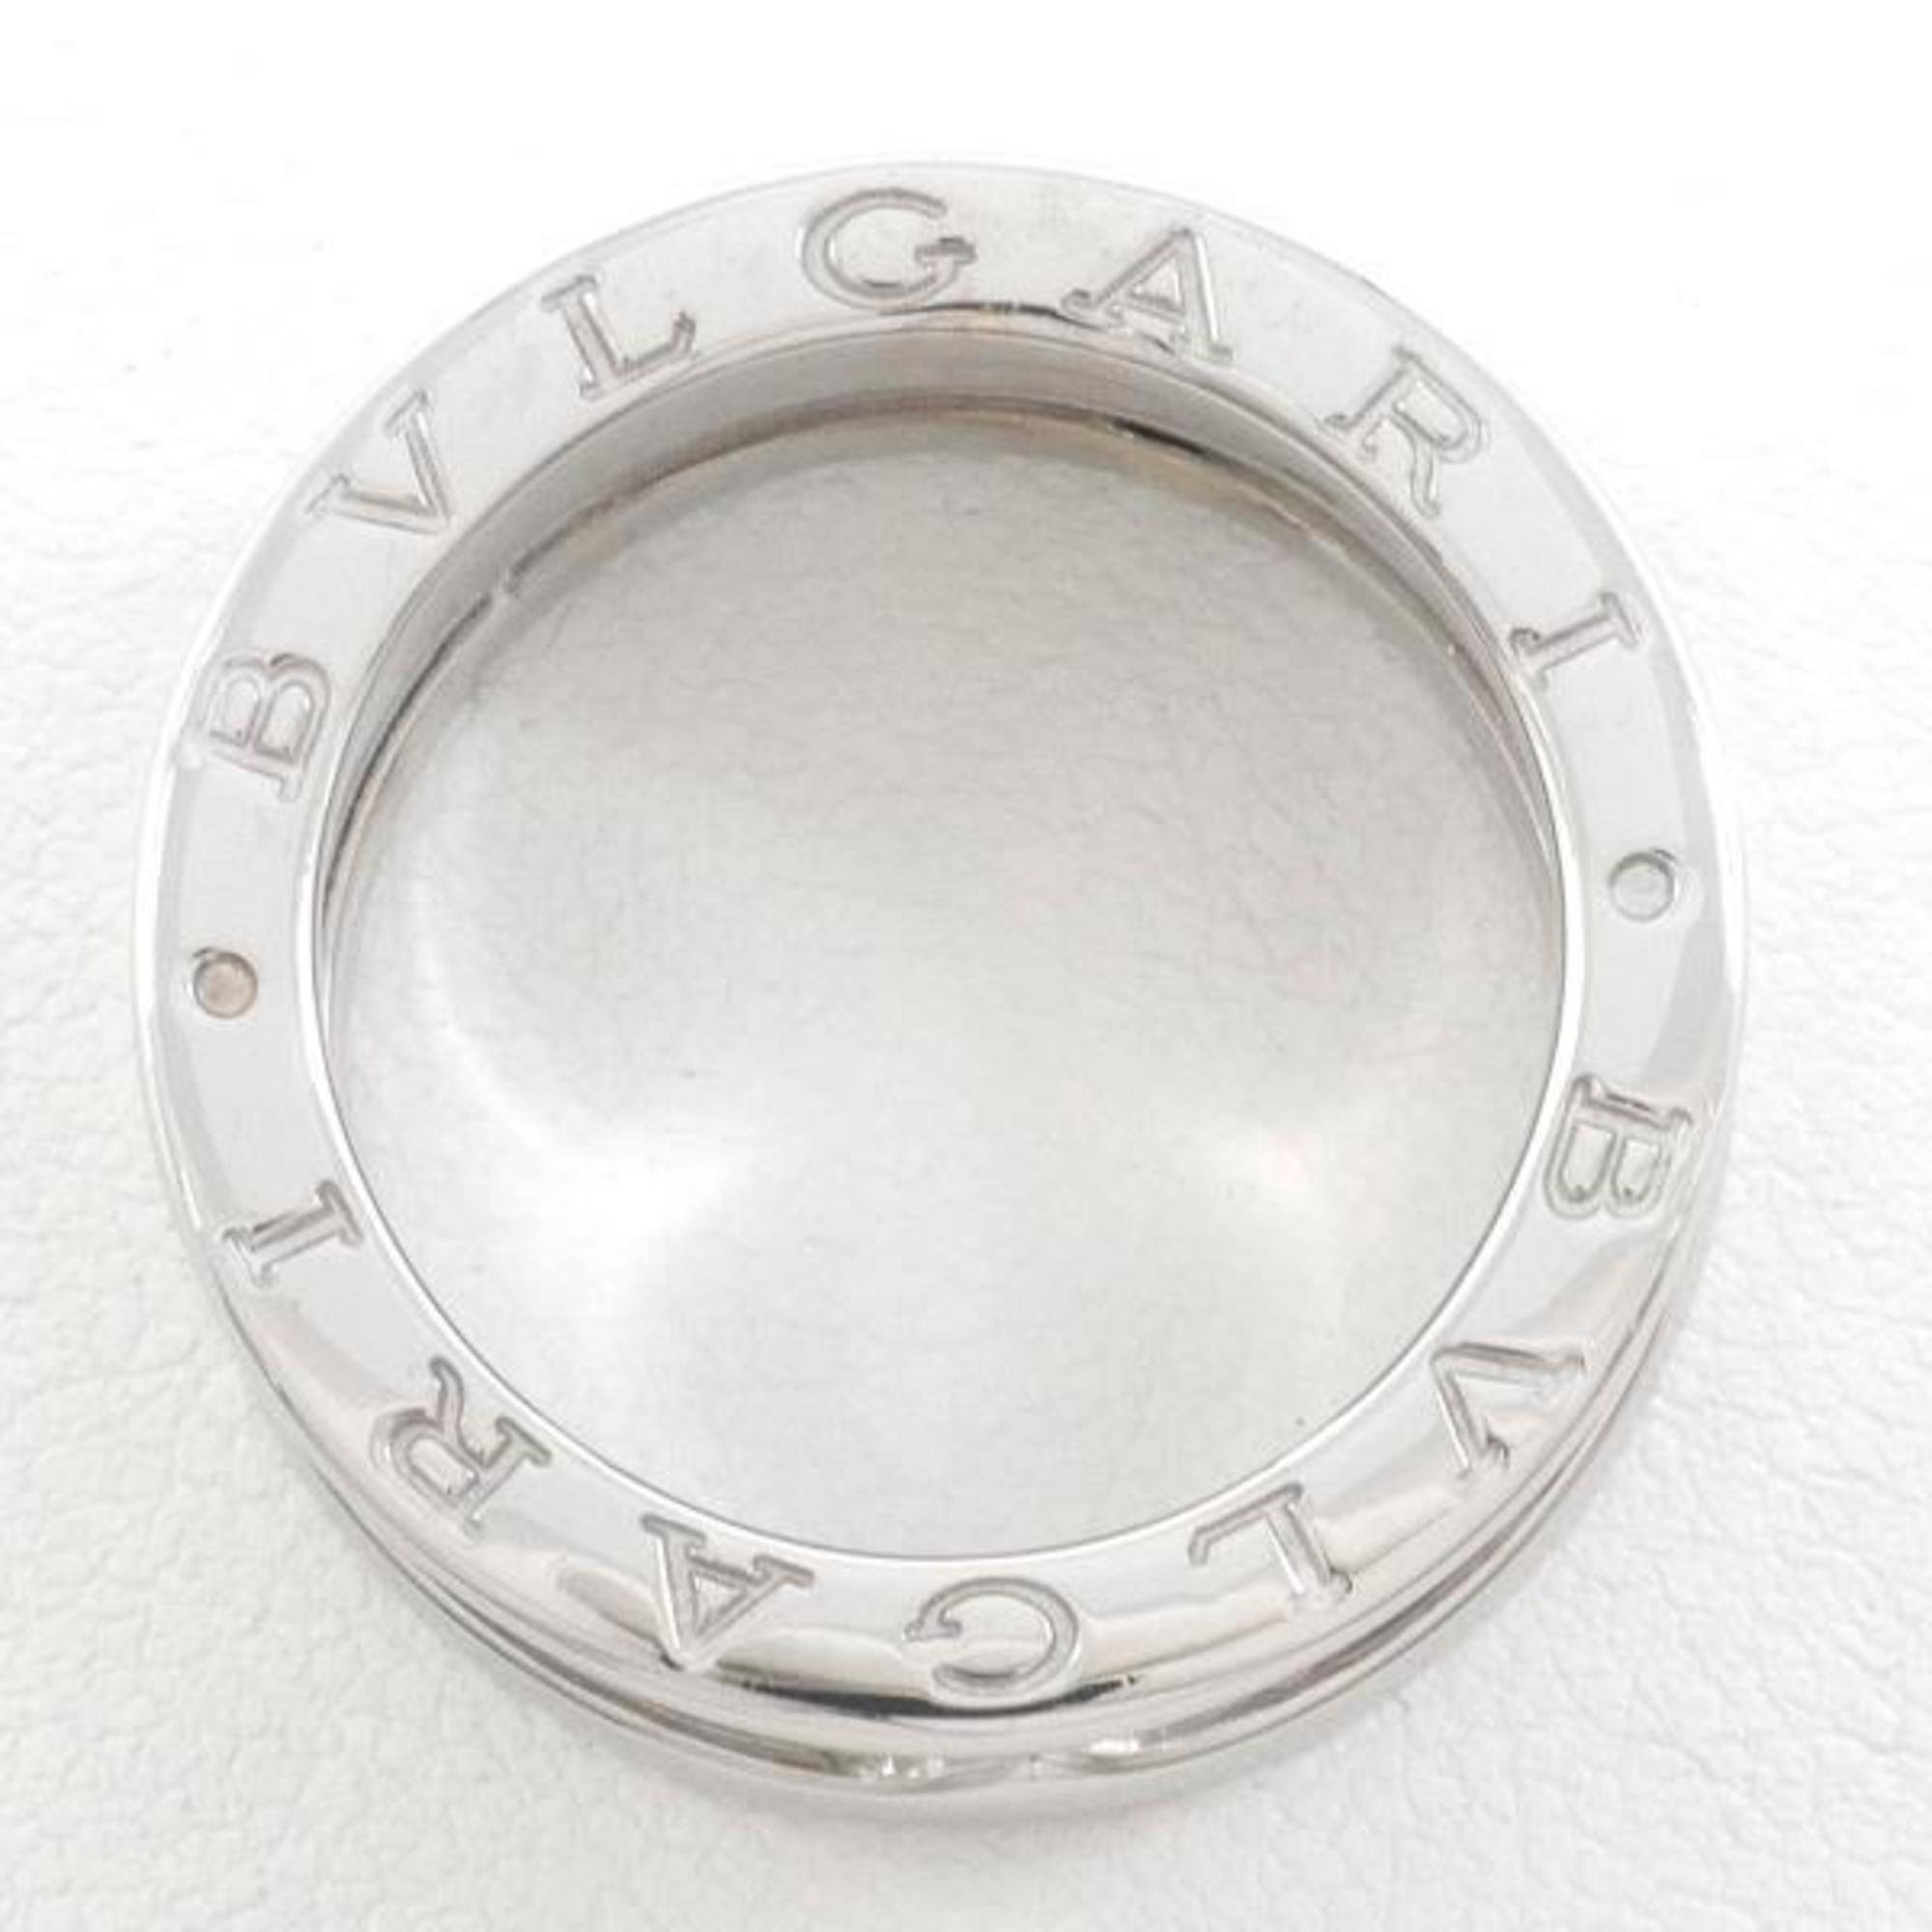 Bvlgari B Zero One K18WG Ring Size 11.5 Total Weight Approx. 11.4g Jewelry